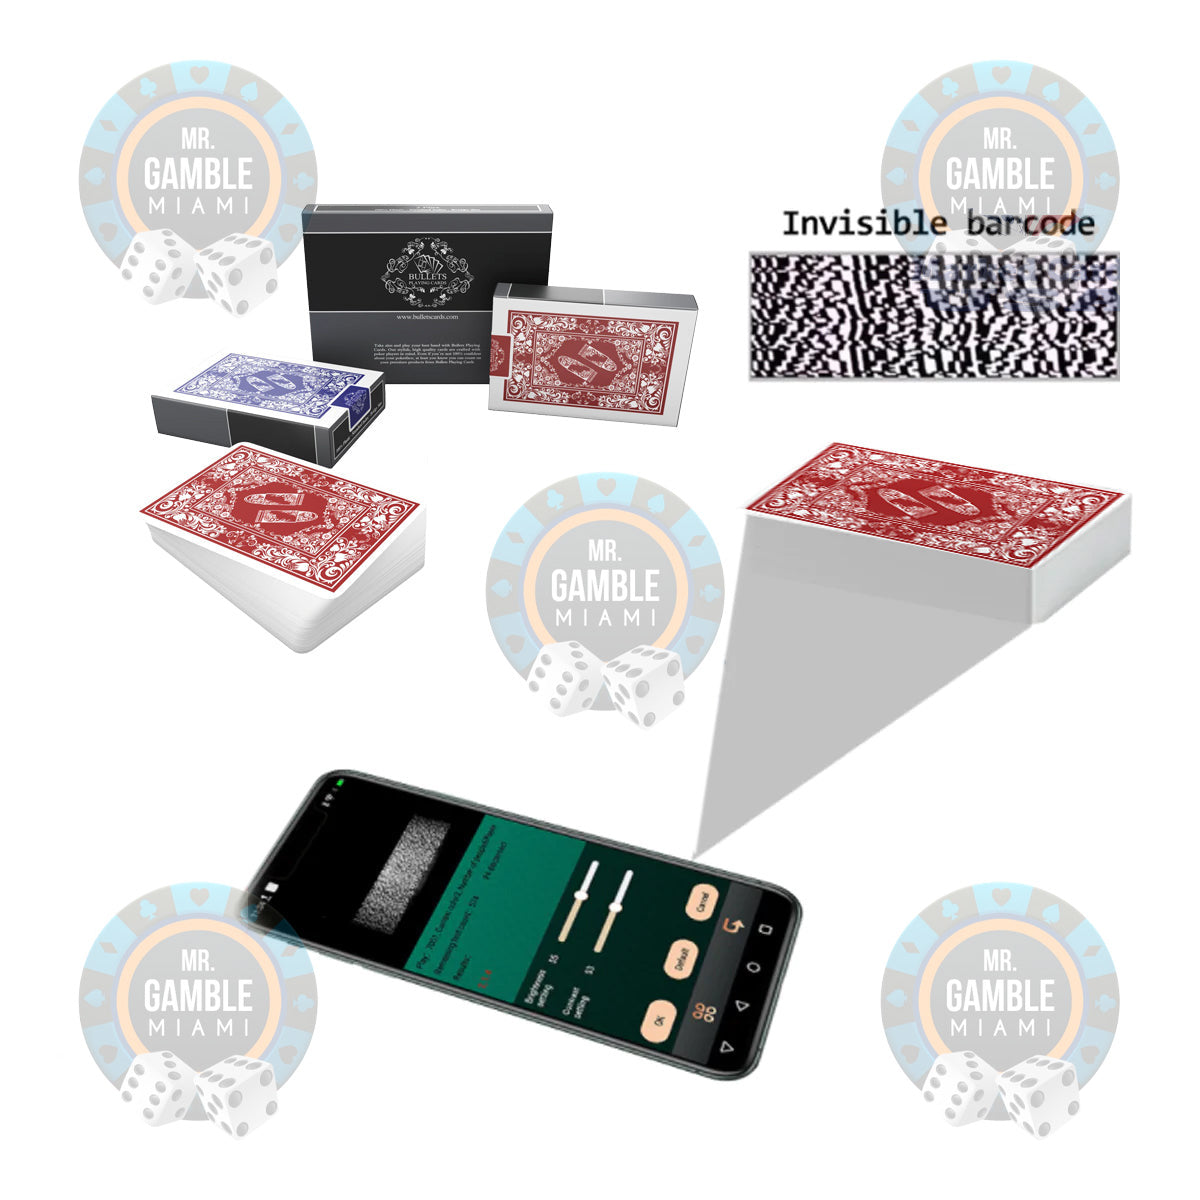 bullets bridge standard barcode marked cards. poker cheat cards